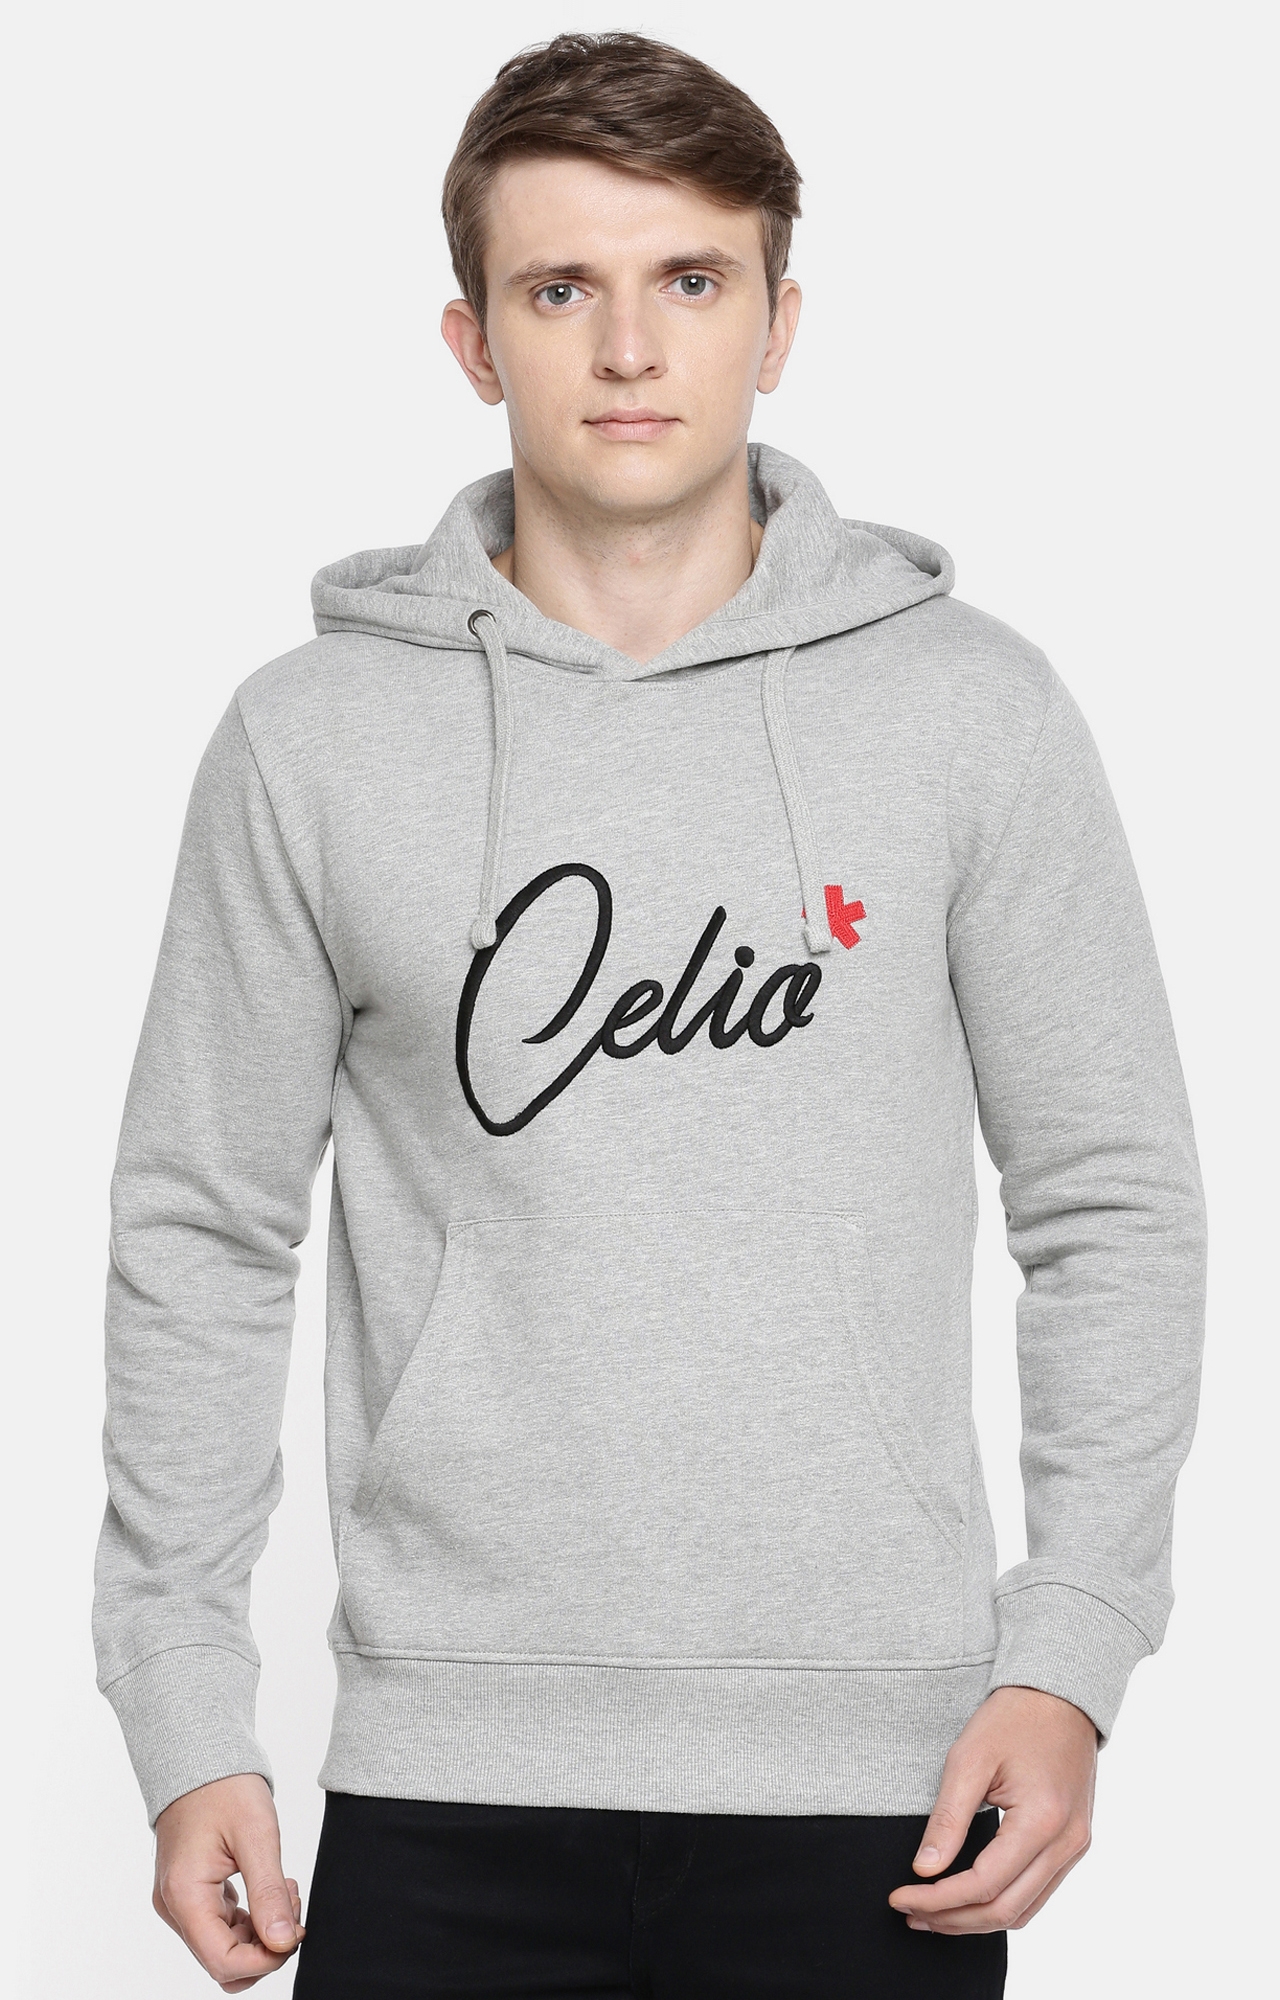 Celio Grey Printed Sweatshirts